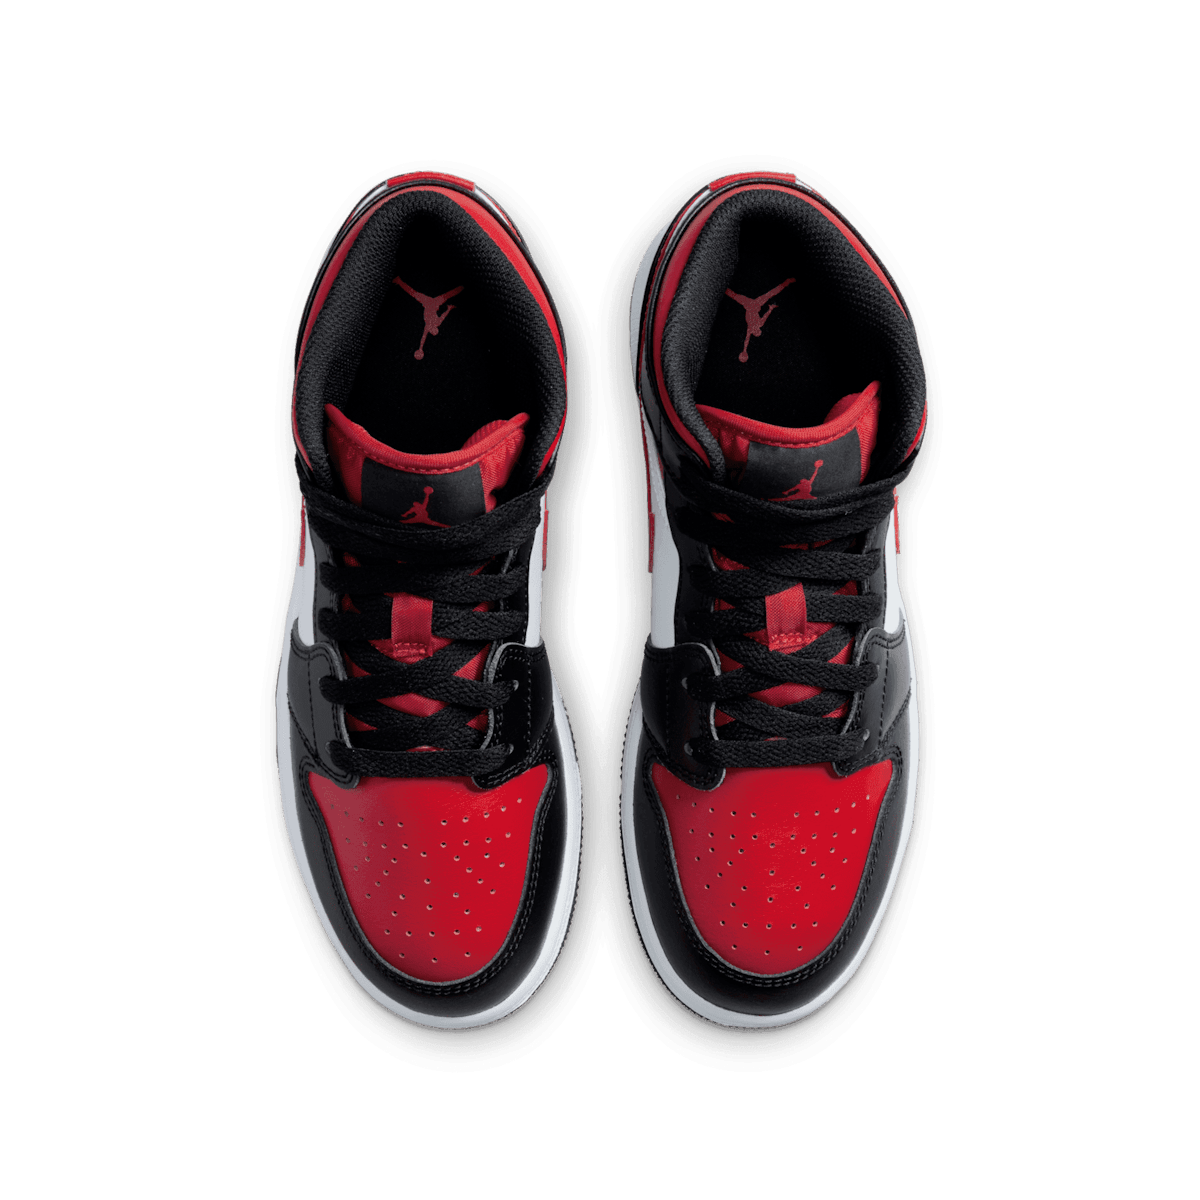 Air Jordan 1 Mid Black Fire Red (GS) - 554725-079 Raffles and